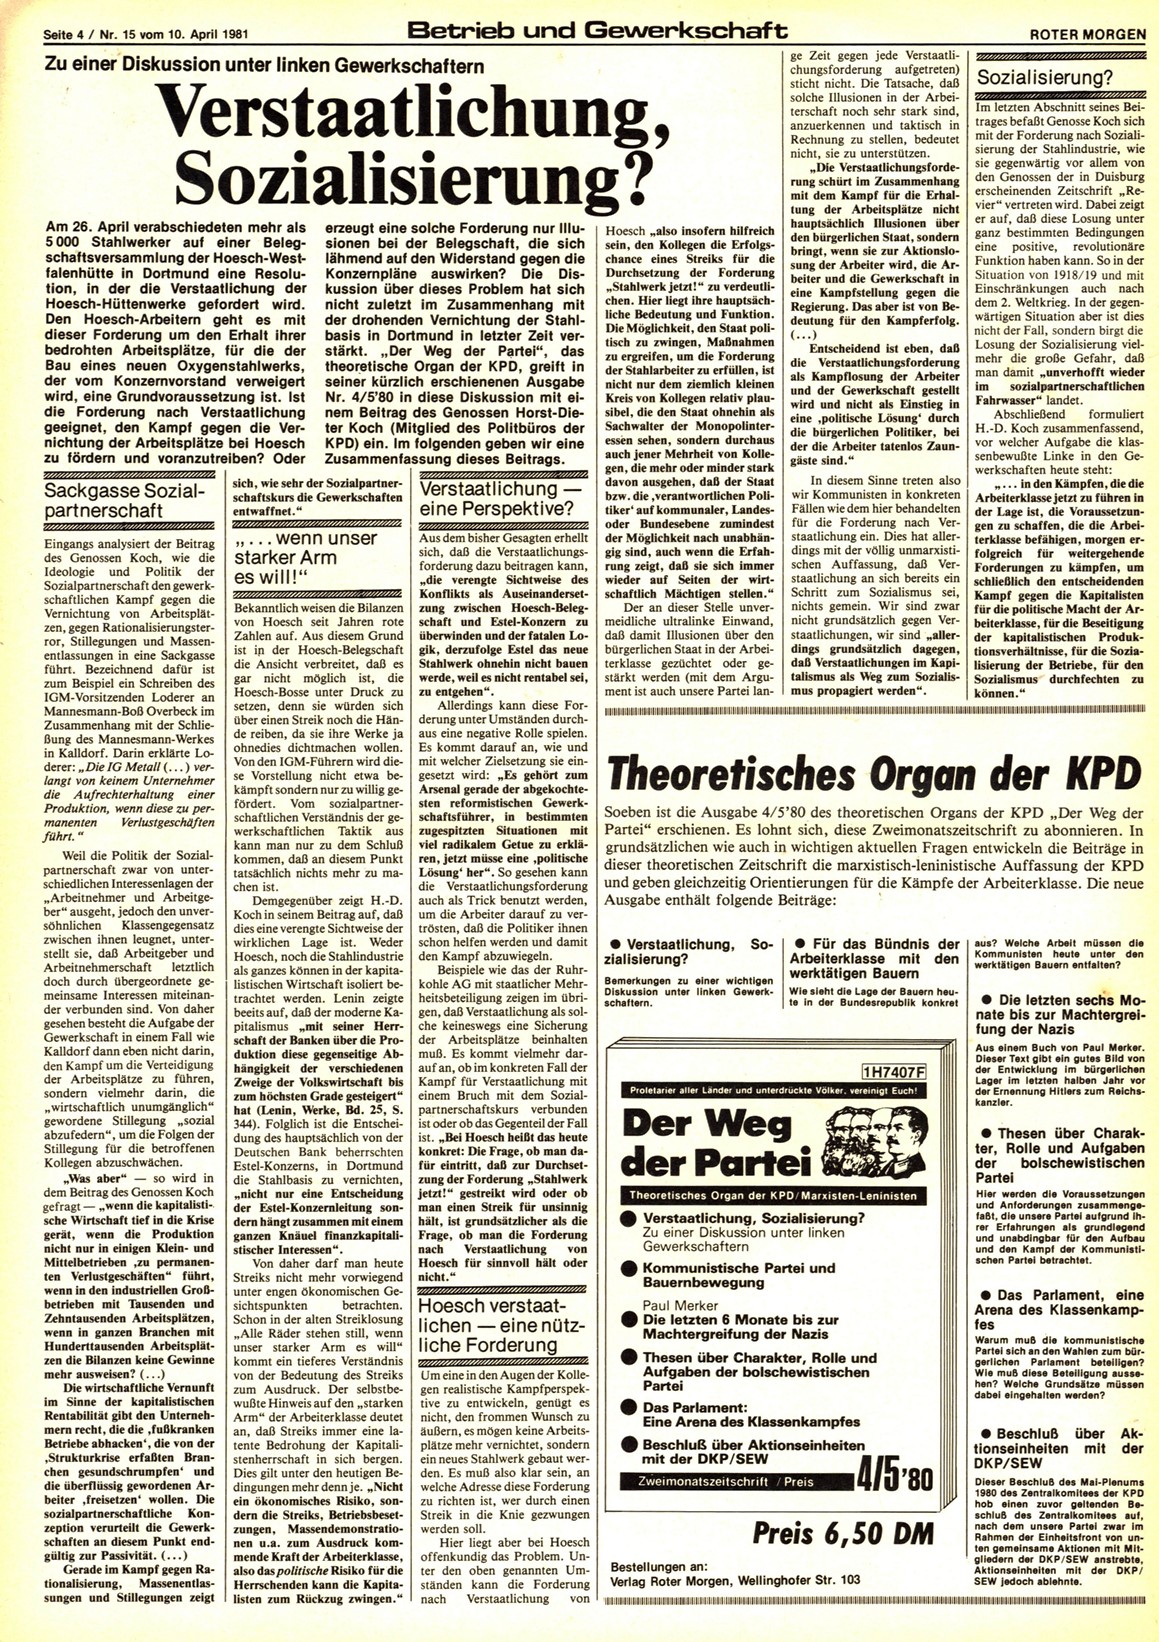 Roter Morgen, 15. Jg., 10. April 1981, Nr. 15, Seite 4